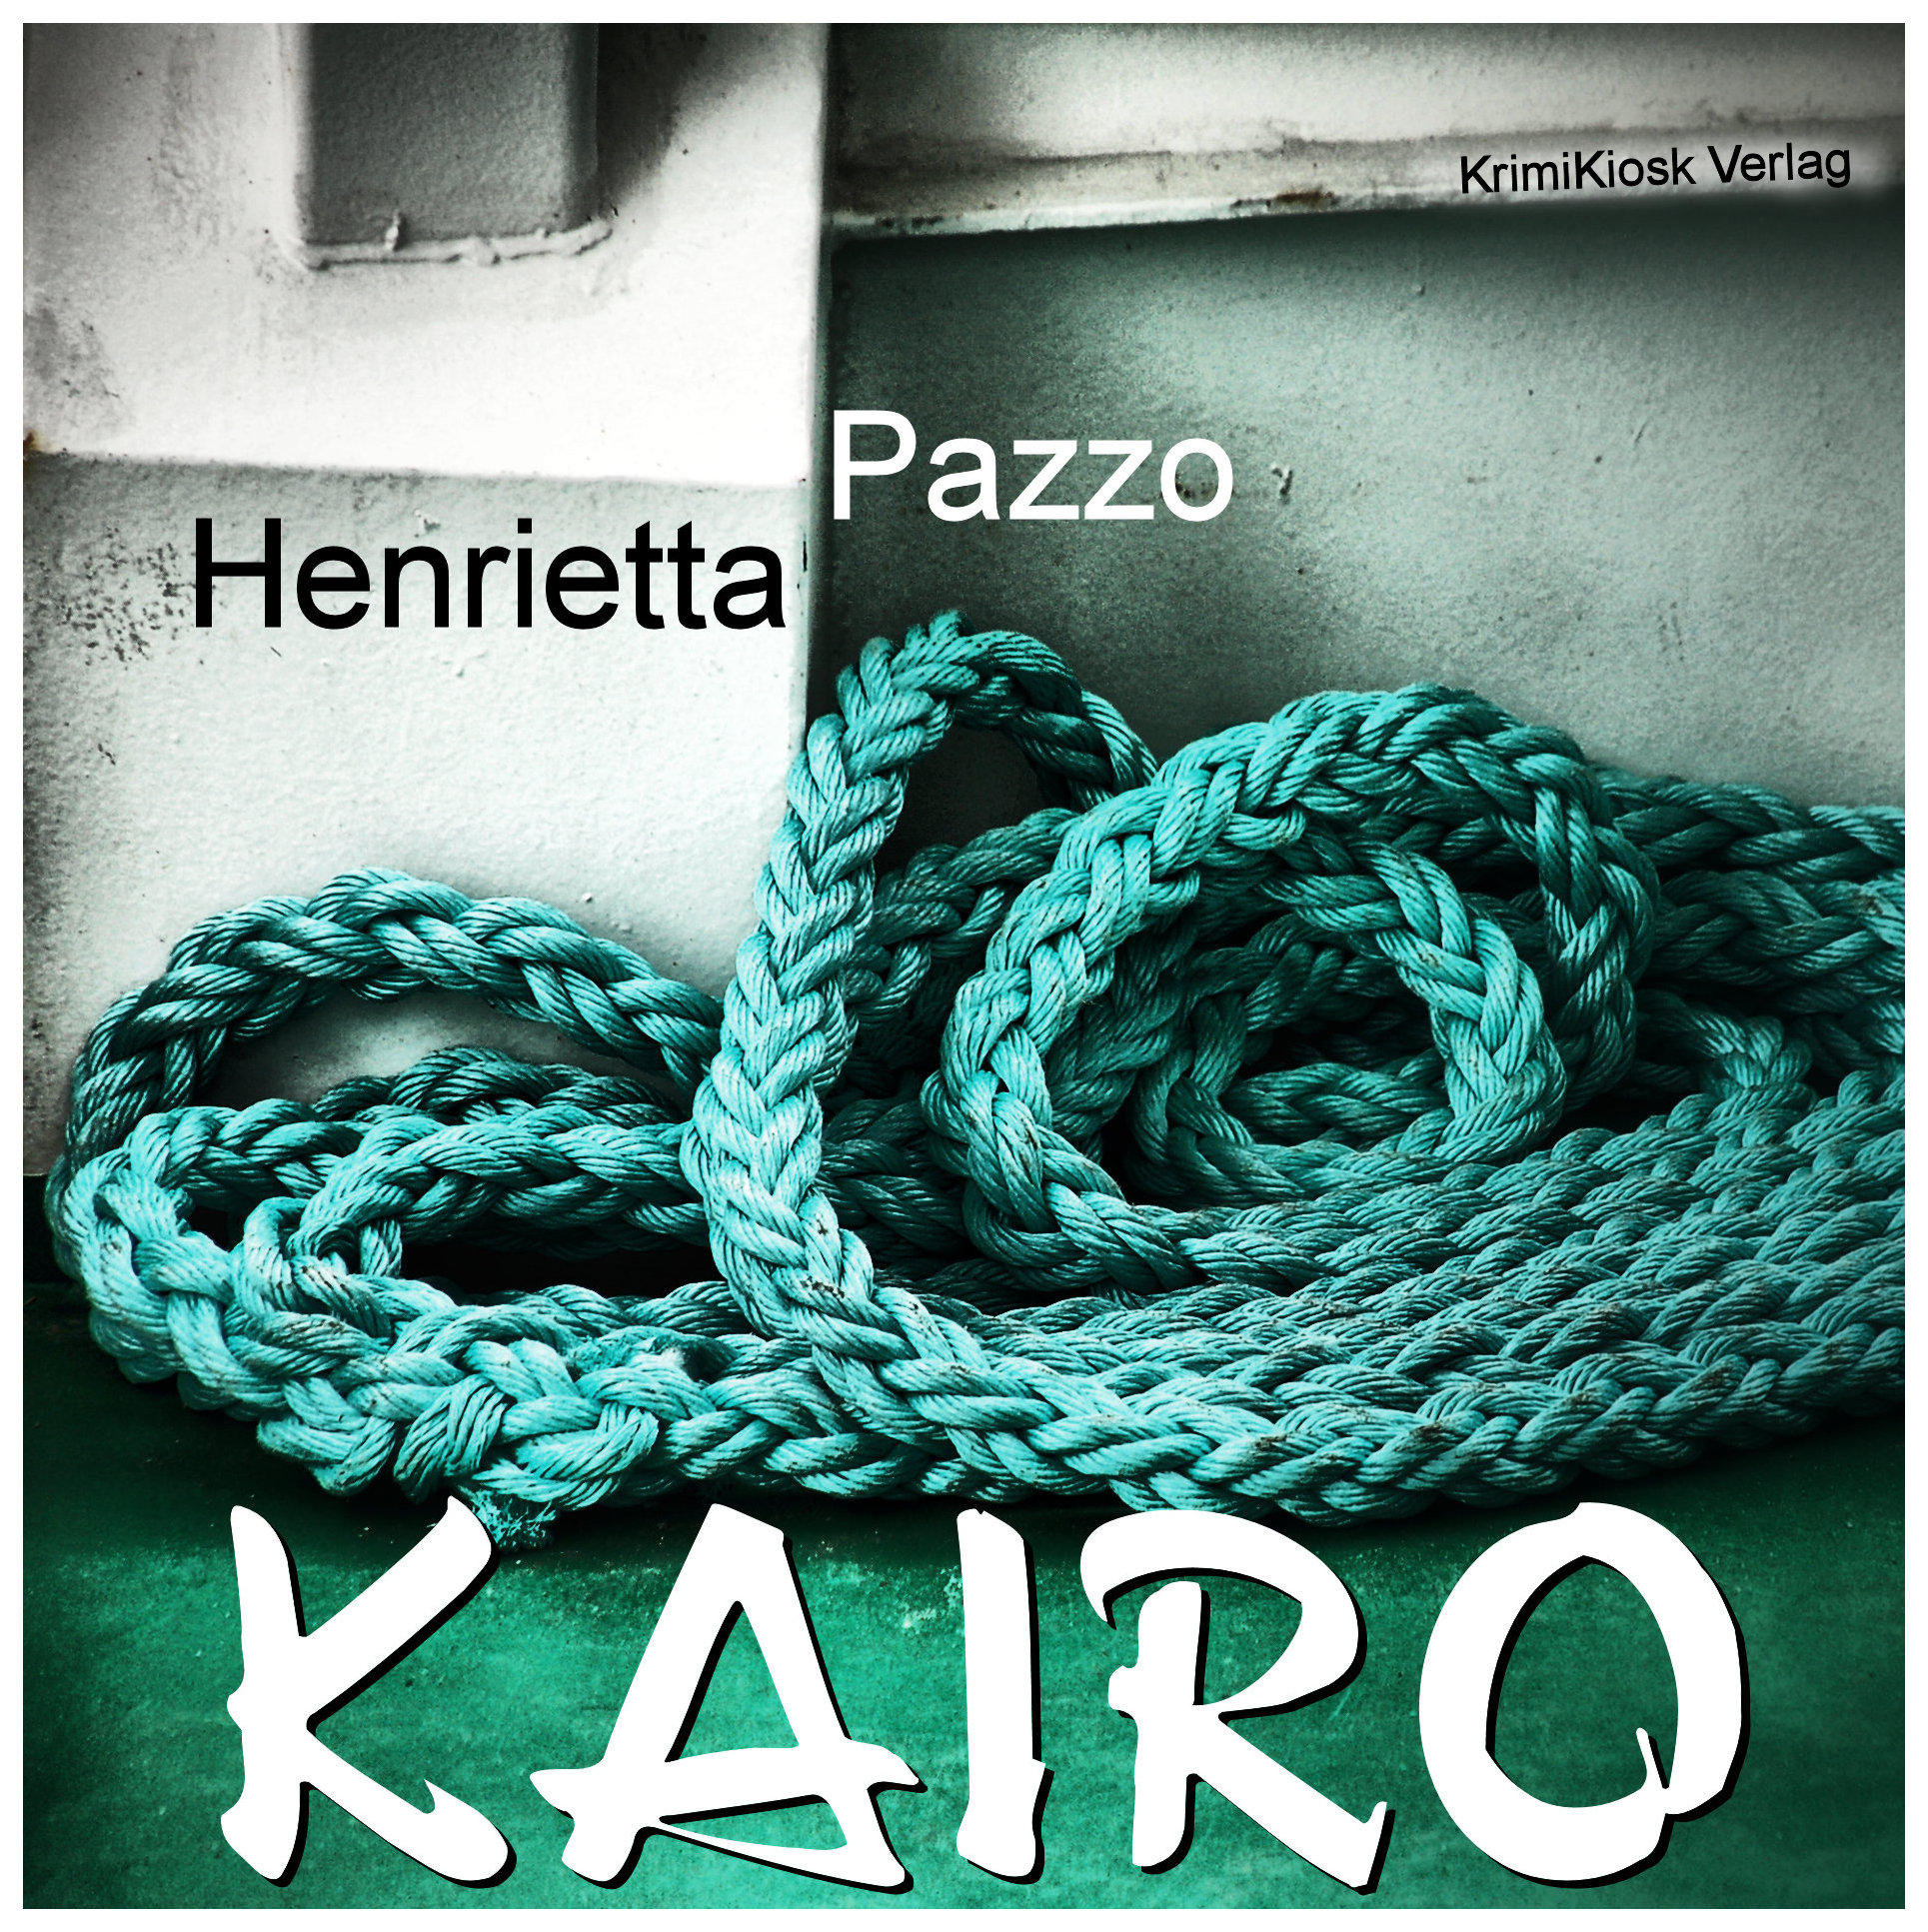 KAIRO  Episode 06 Kriminalroman von Henrietta Pazzo